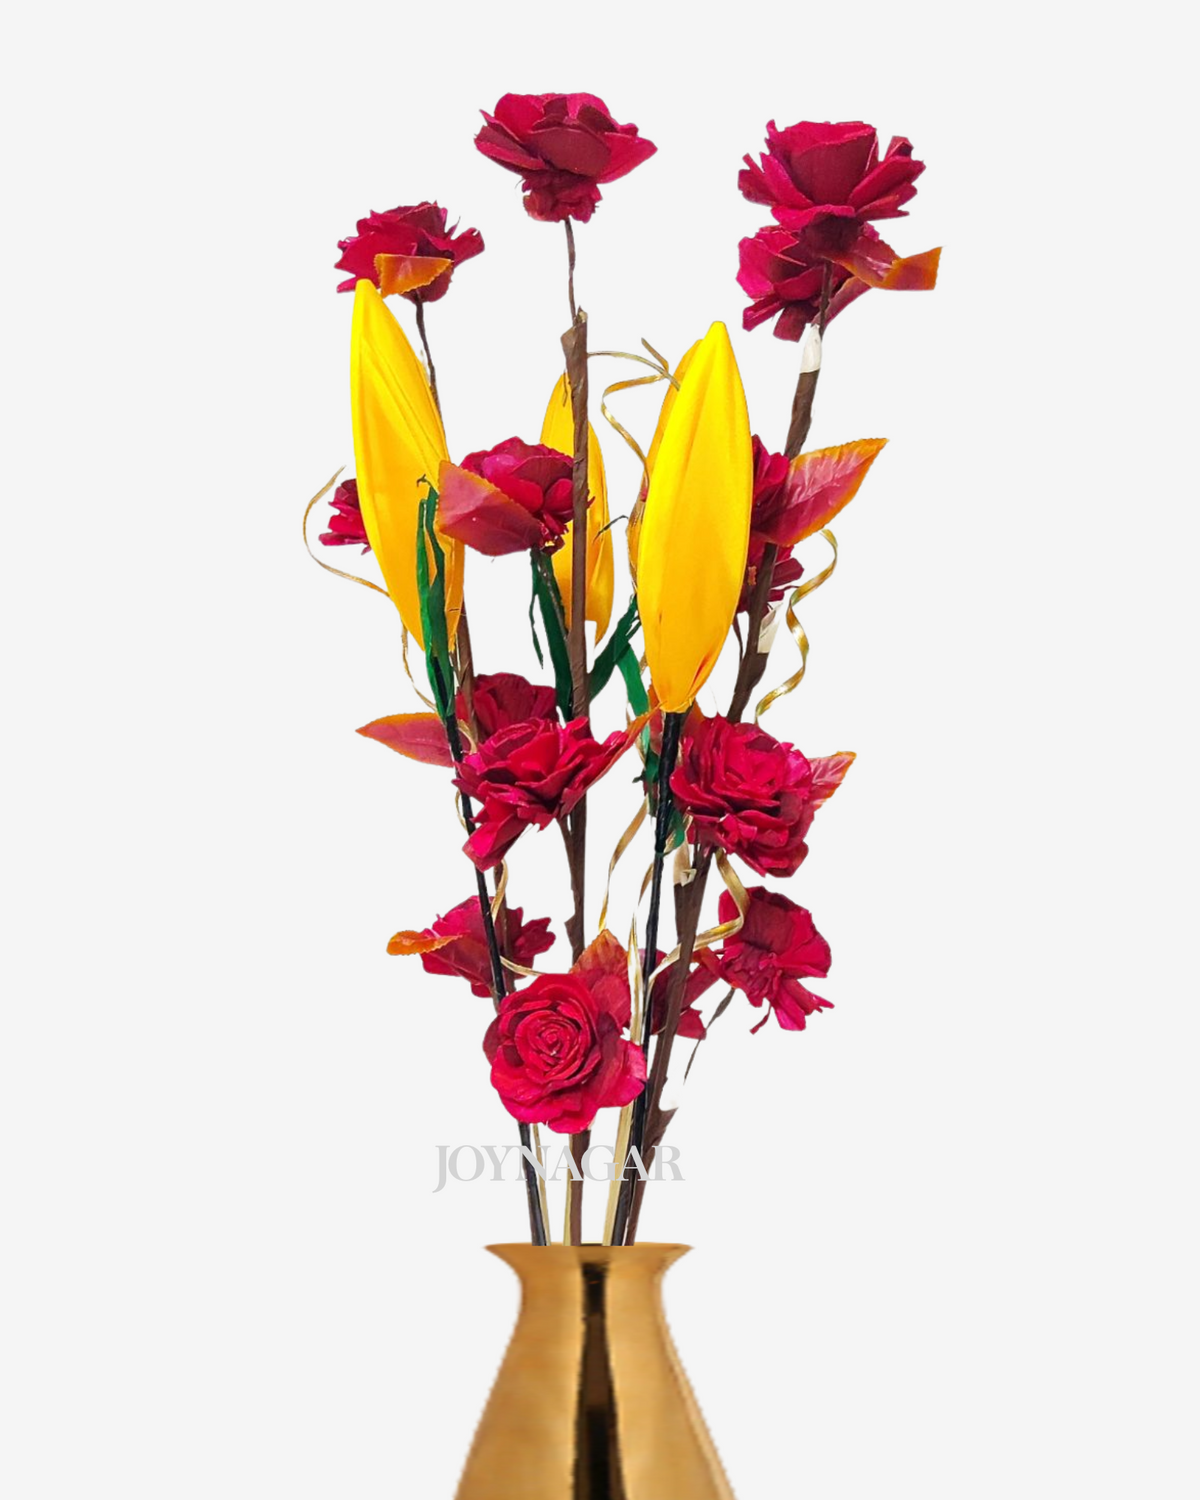 Sola Beauty Rose Lotus Buds Mix Flower Bunch Joynagar Handicraft Artificial Flowers color_random